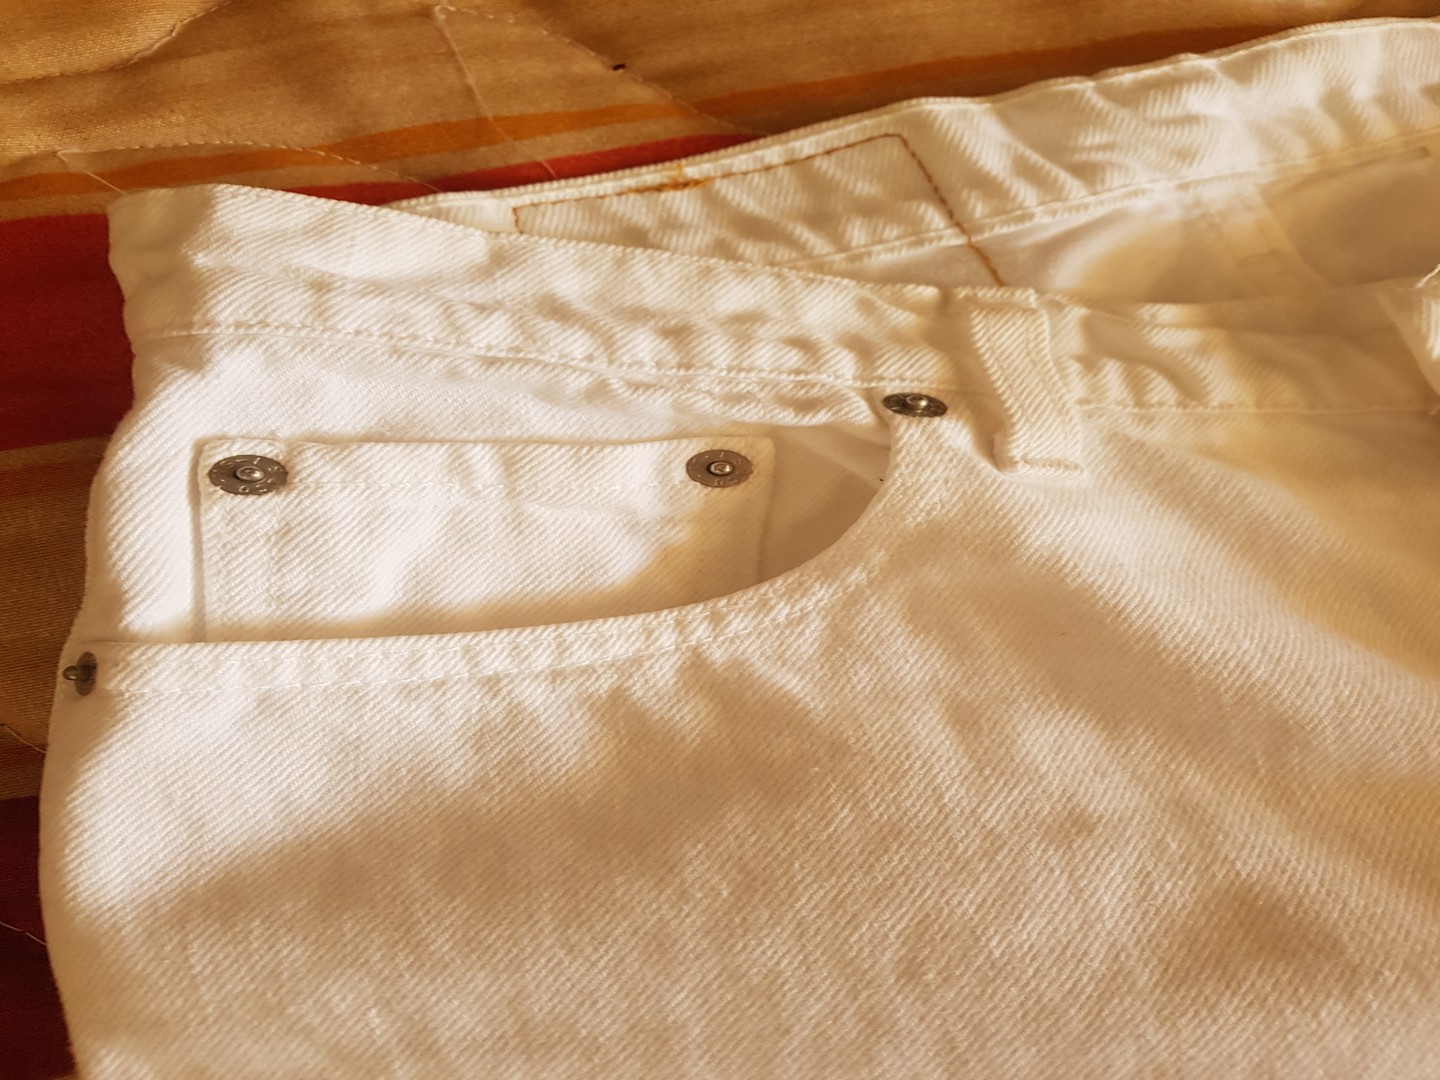 Pantalón blanco, diseño exclusivo de Bill Blass, tela estilo jeans 5